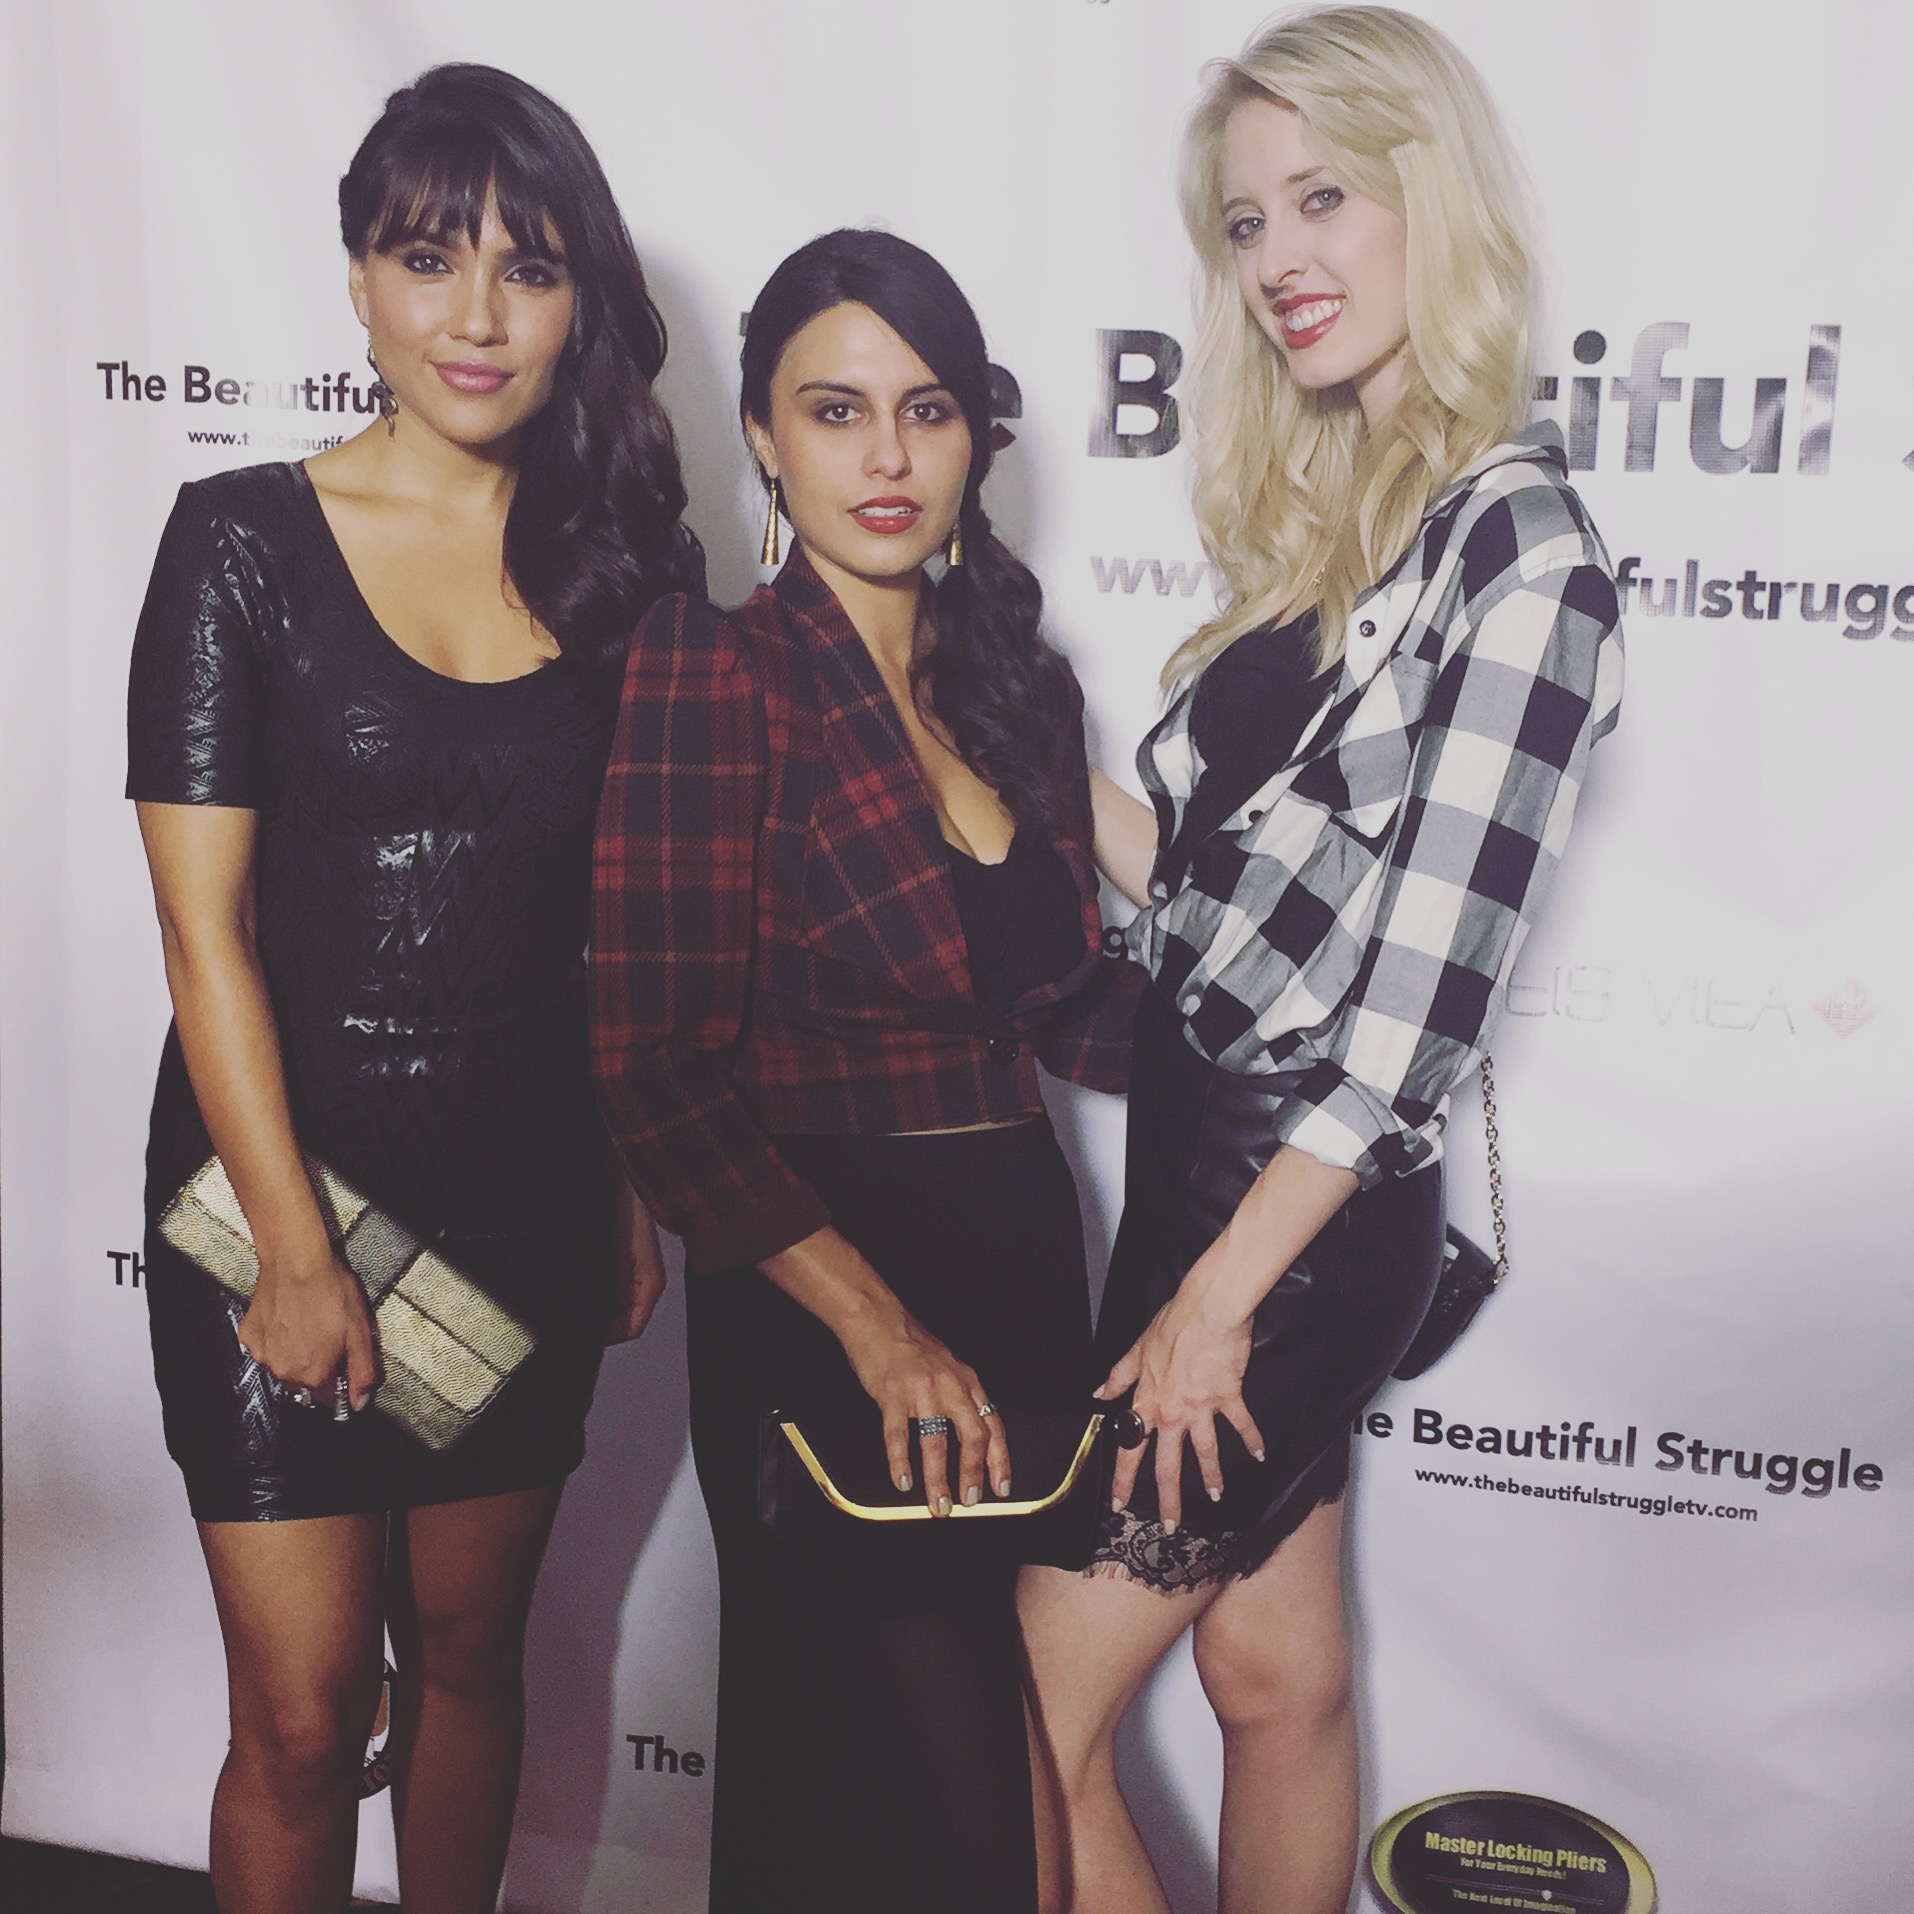 Tara Malenfant, Angie Sanchez and Olivia Scott at The Beautiful Struggle premiere.